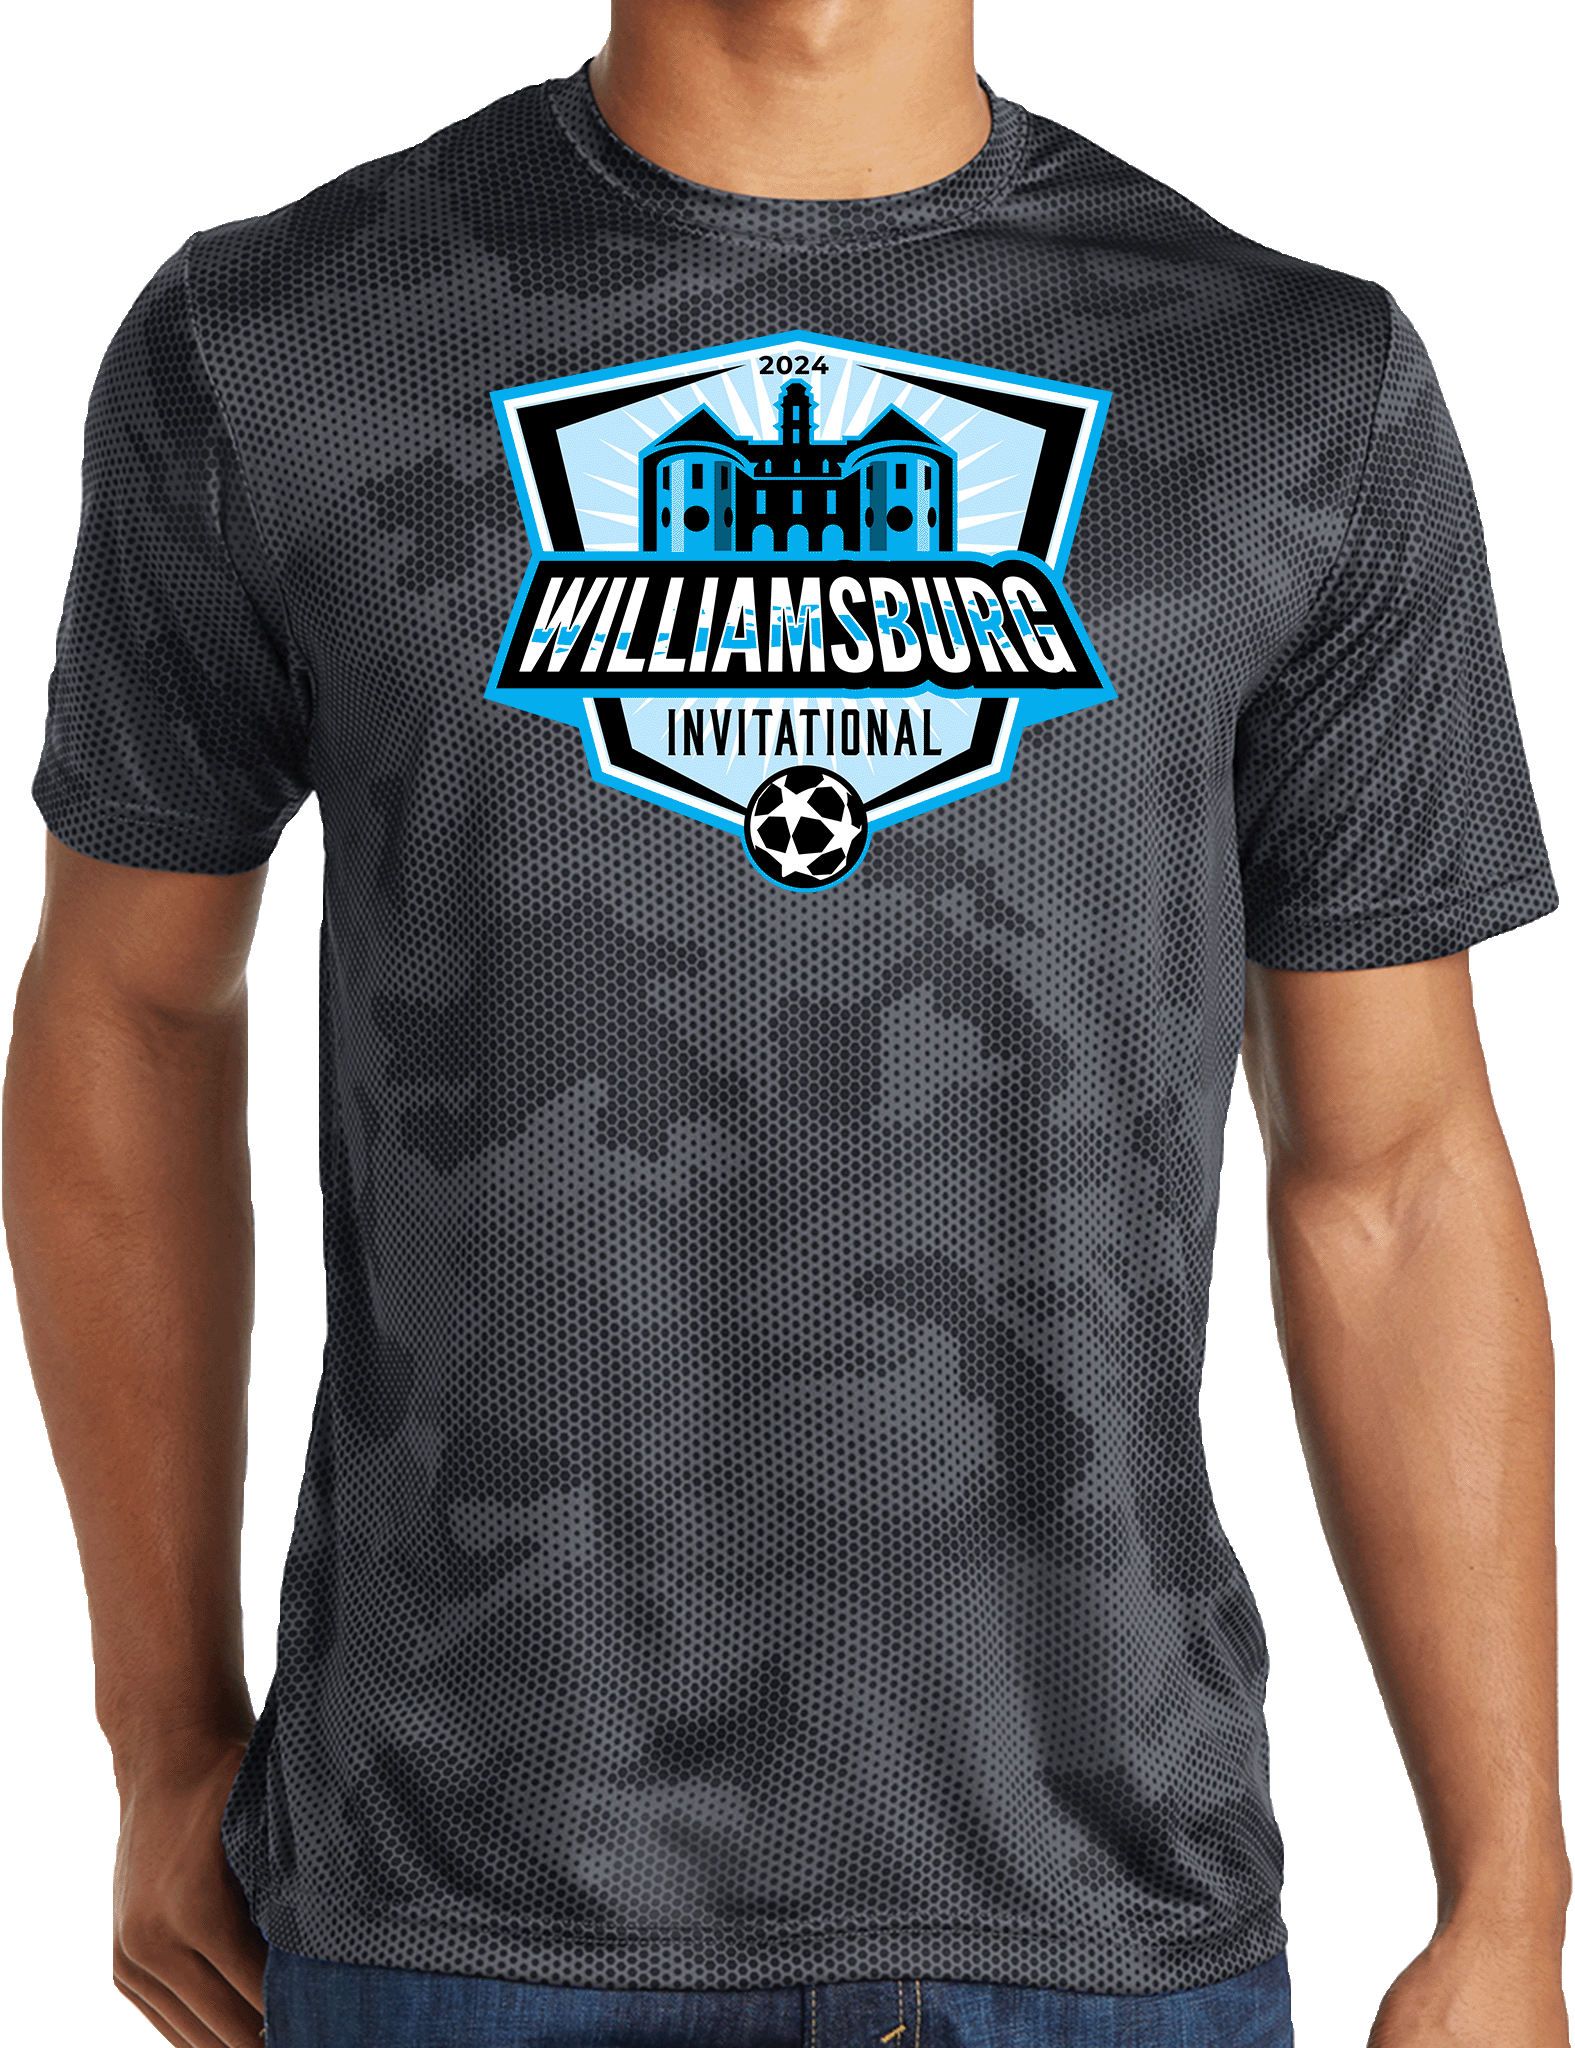 Performance Shirts - 2024 Williamsburg Invitational